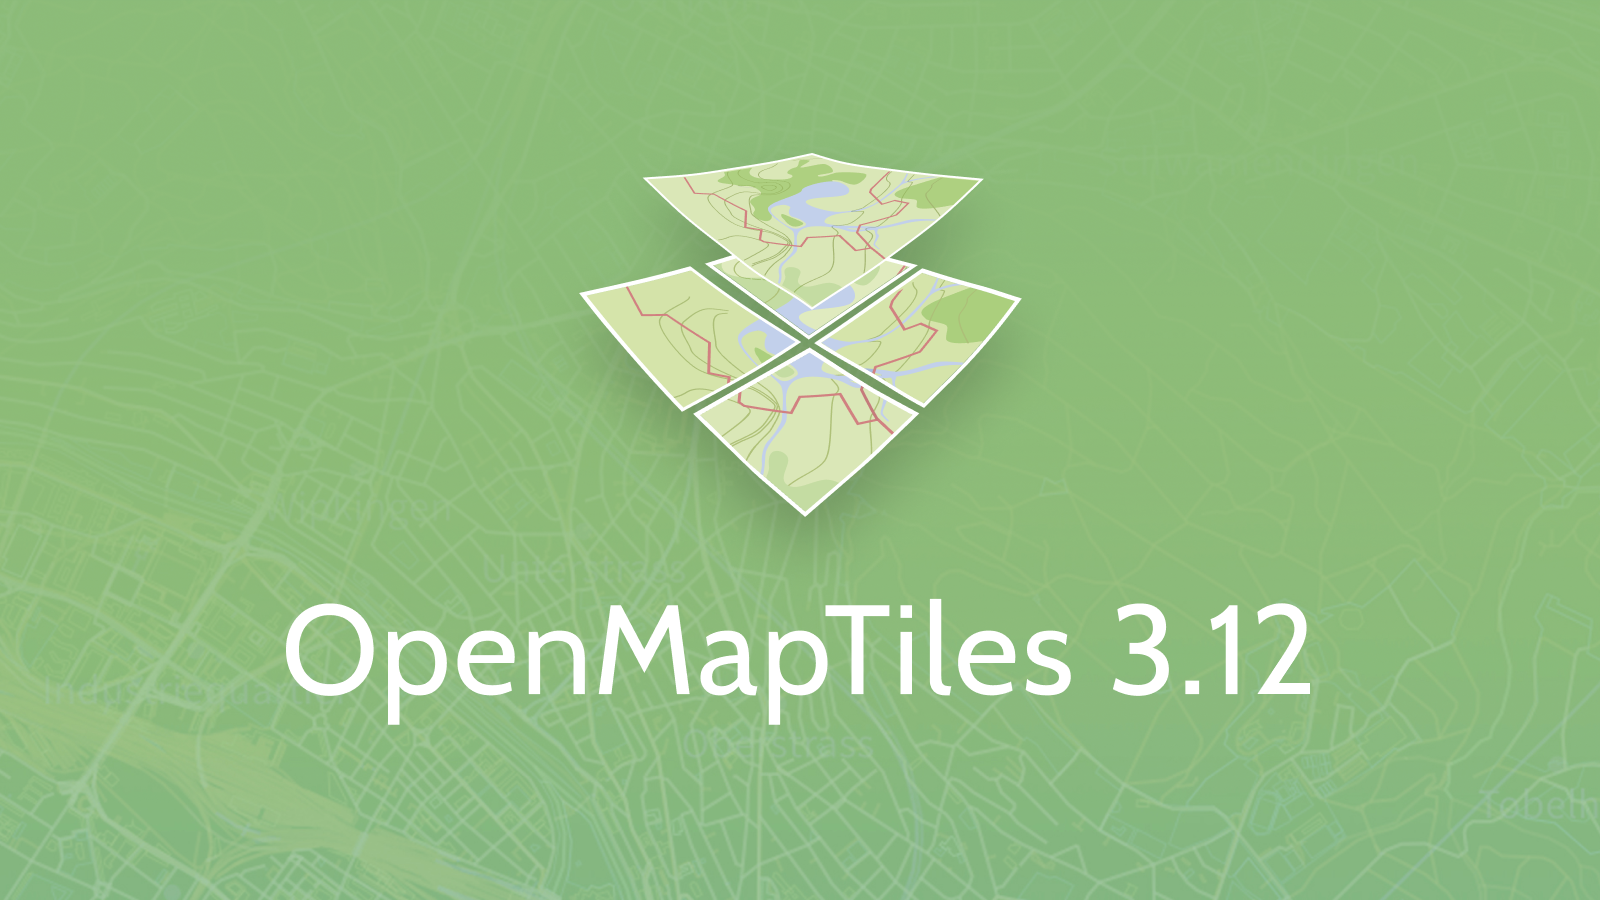 OpenMapTiles 3.12: improved city centers image